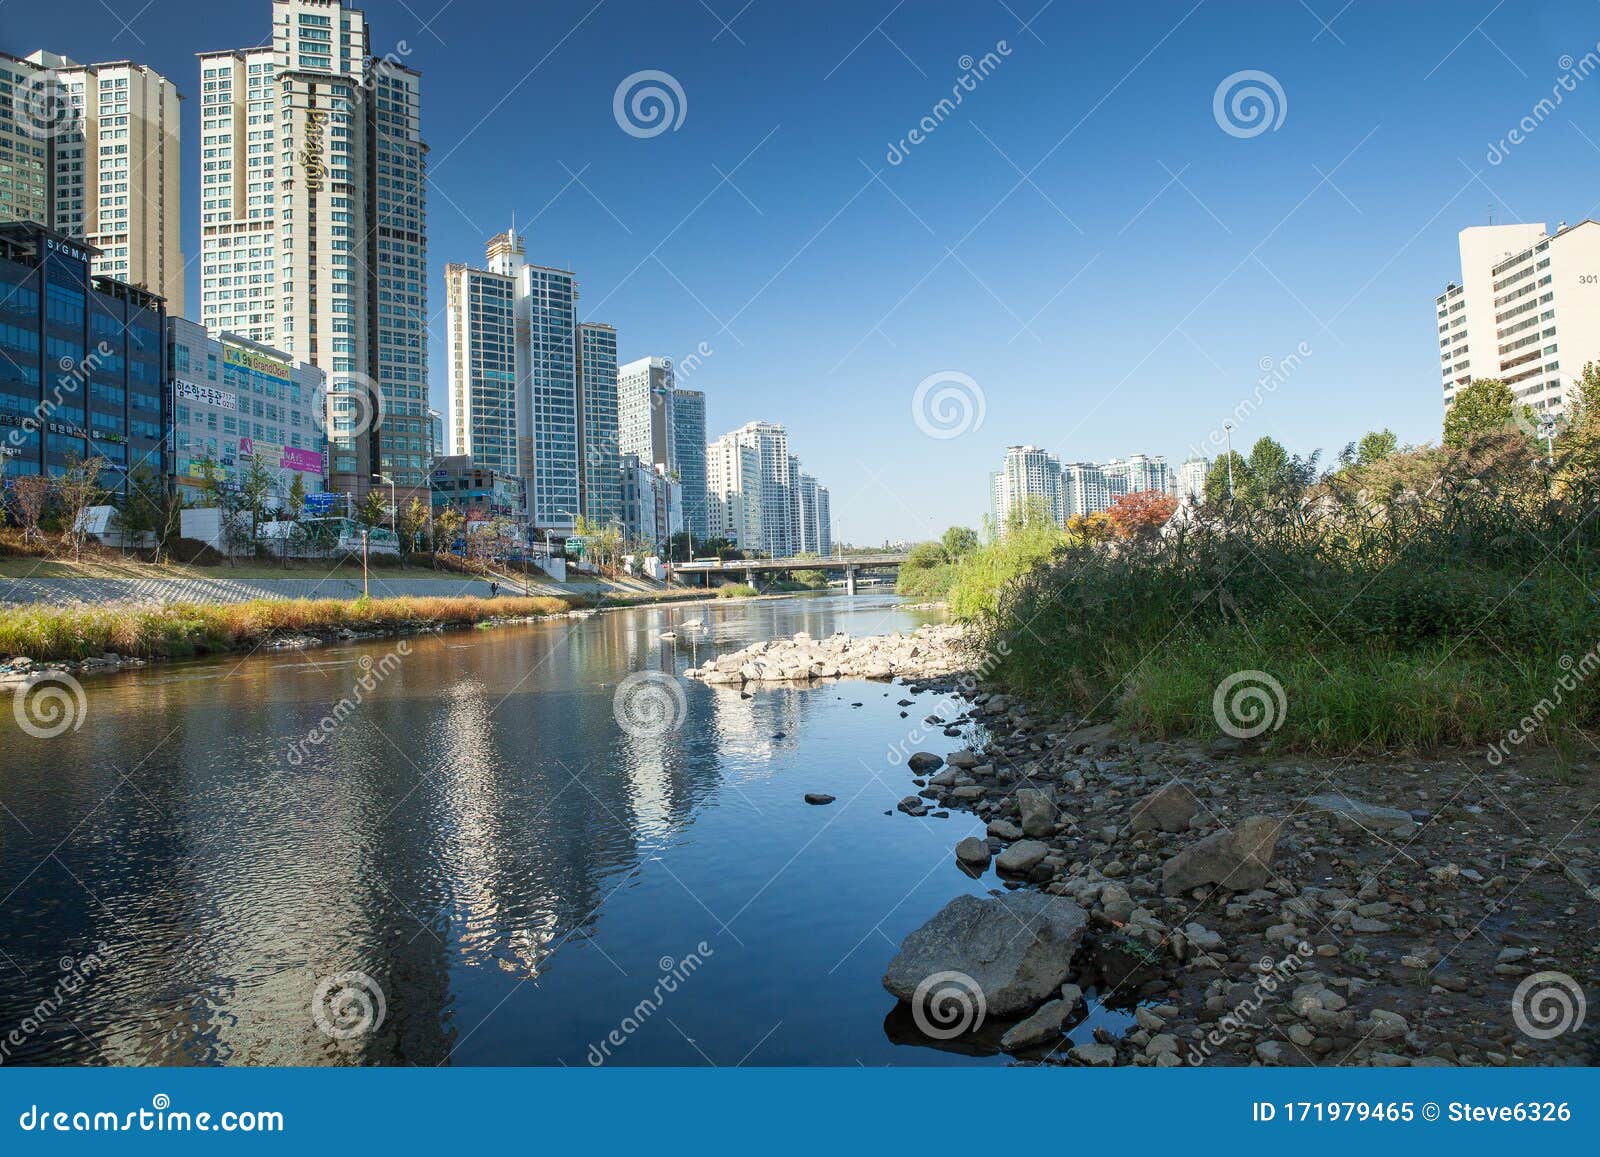 Panorama Bundang Area Seoul Capital South Korea Has Population Over M City Greater Second Largest Metropolitan 171979465 